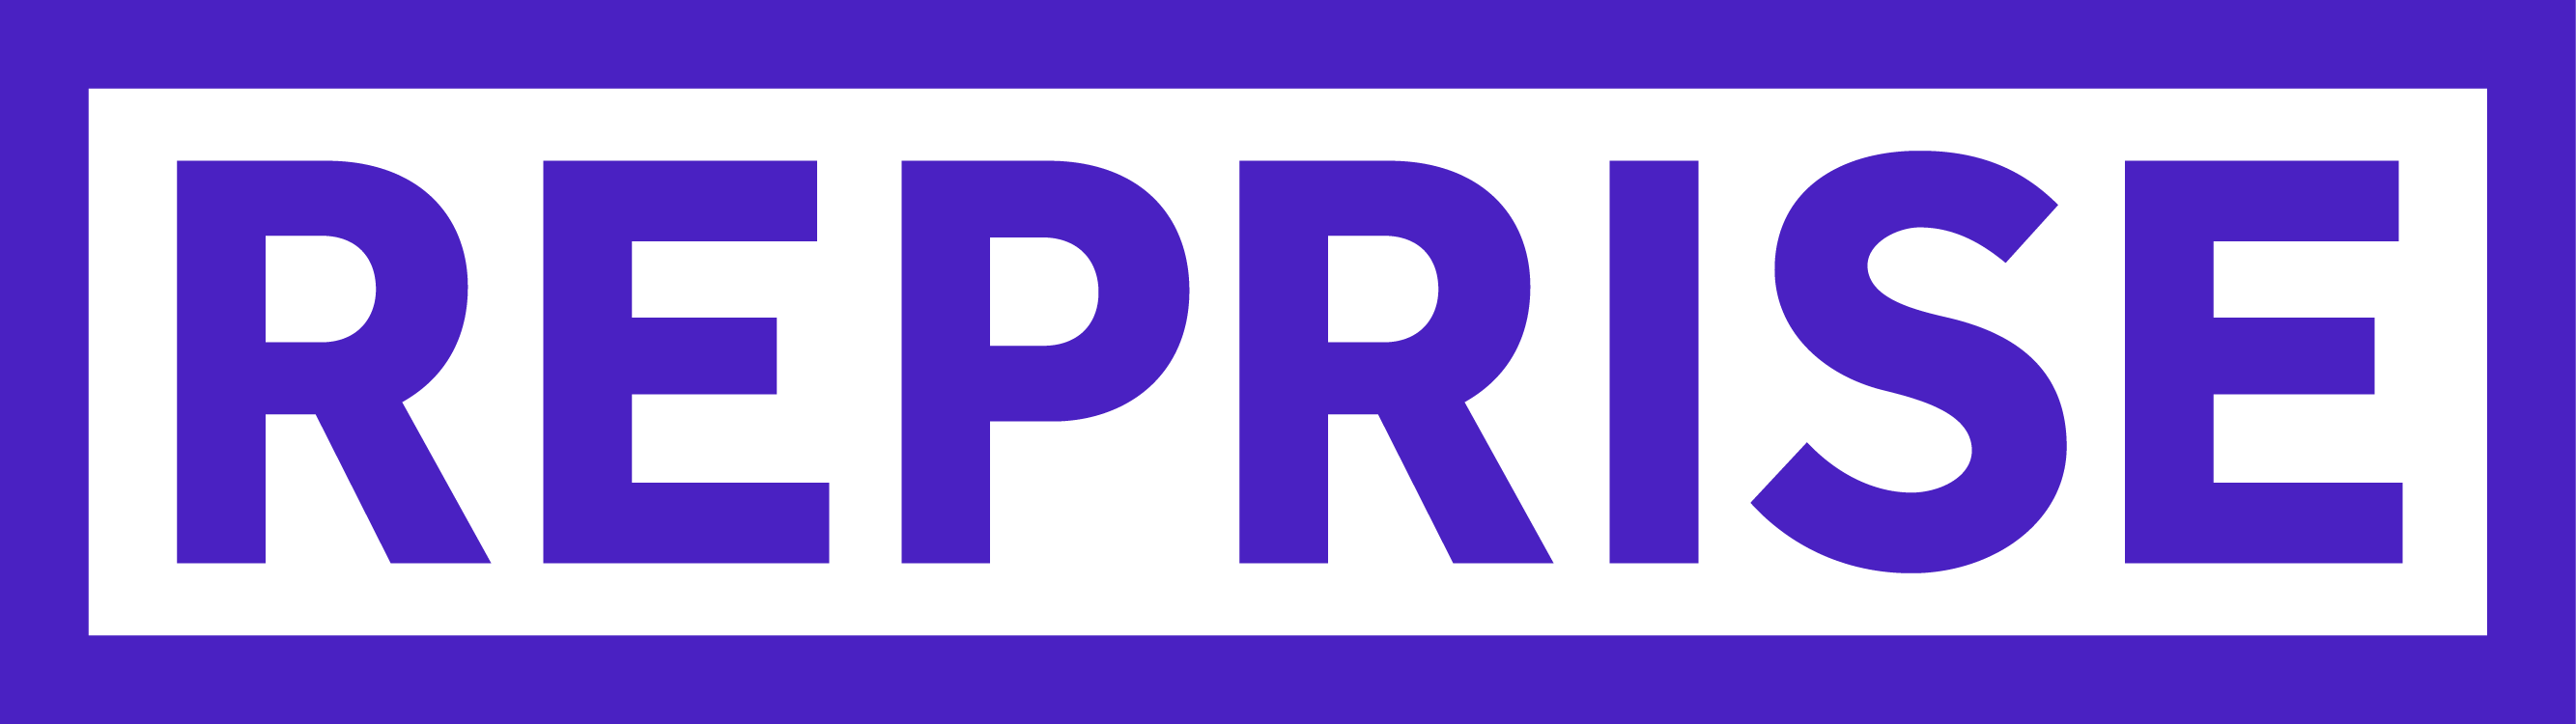 Reprise Logo_Purple